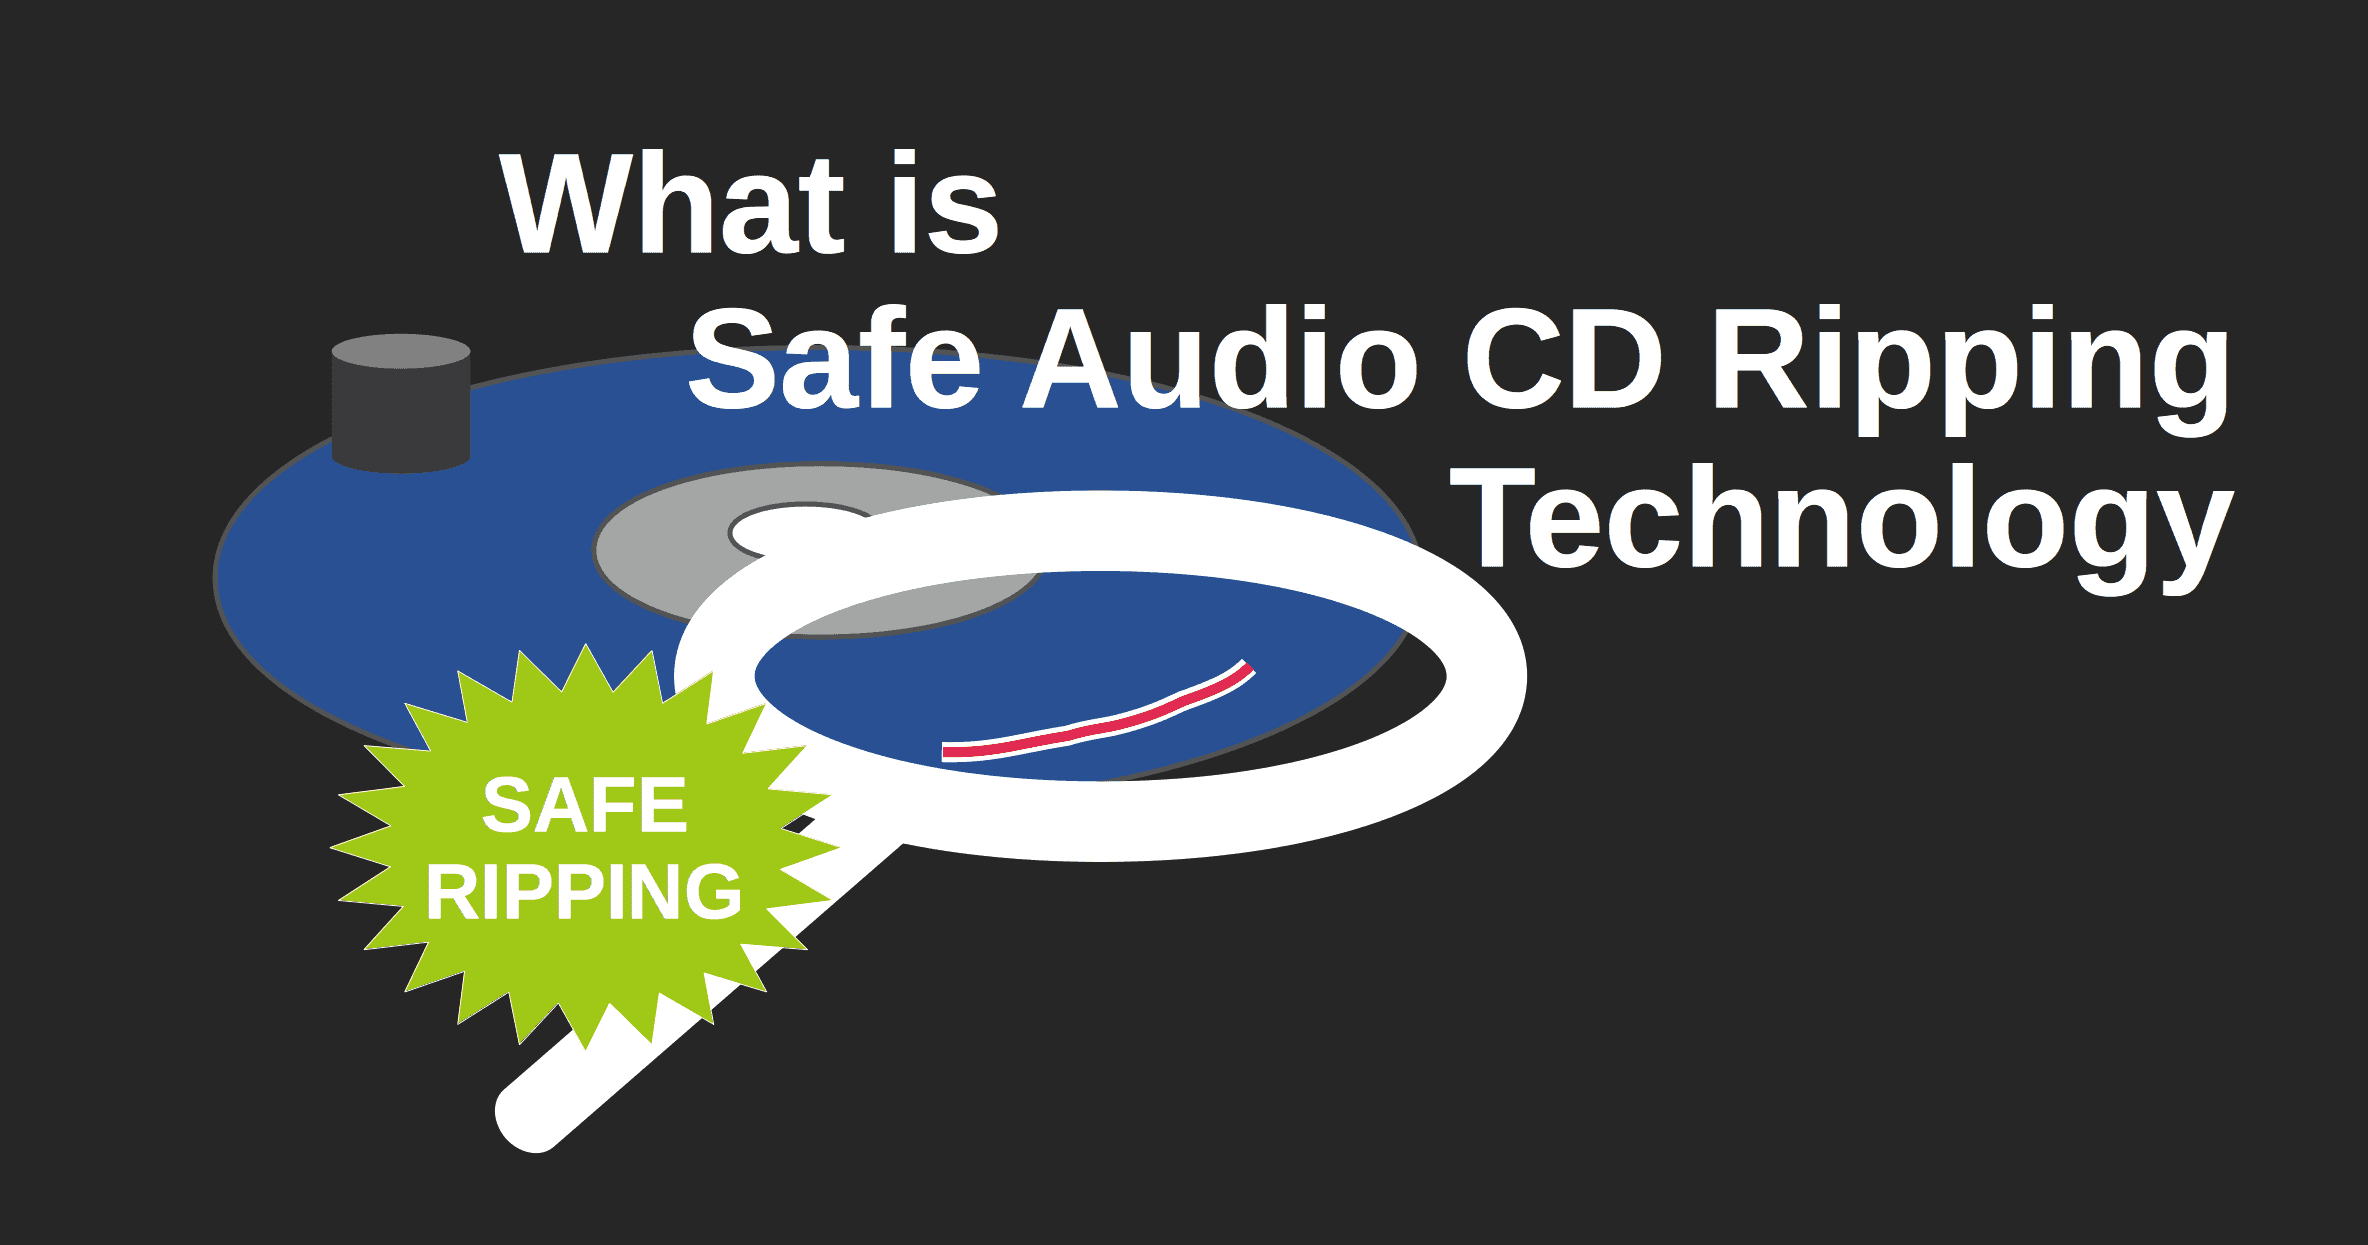 Safe CD ripping